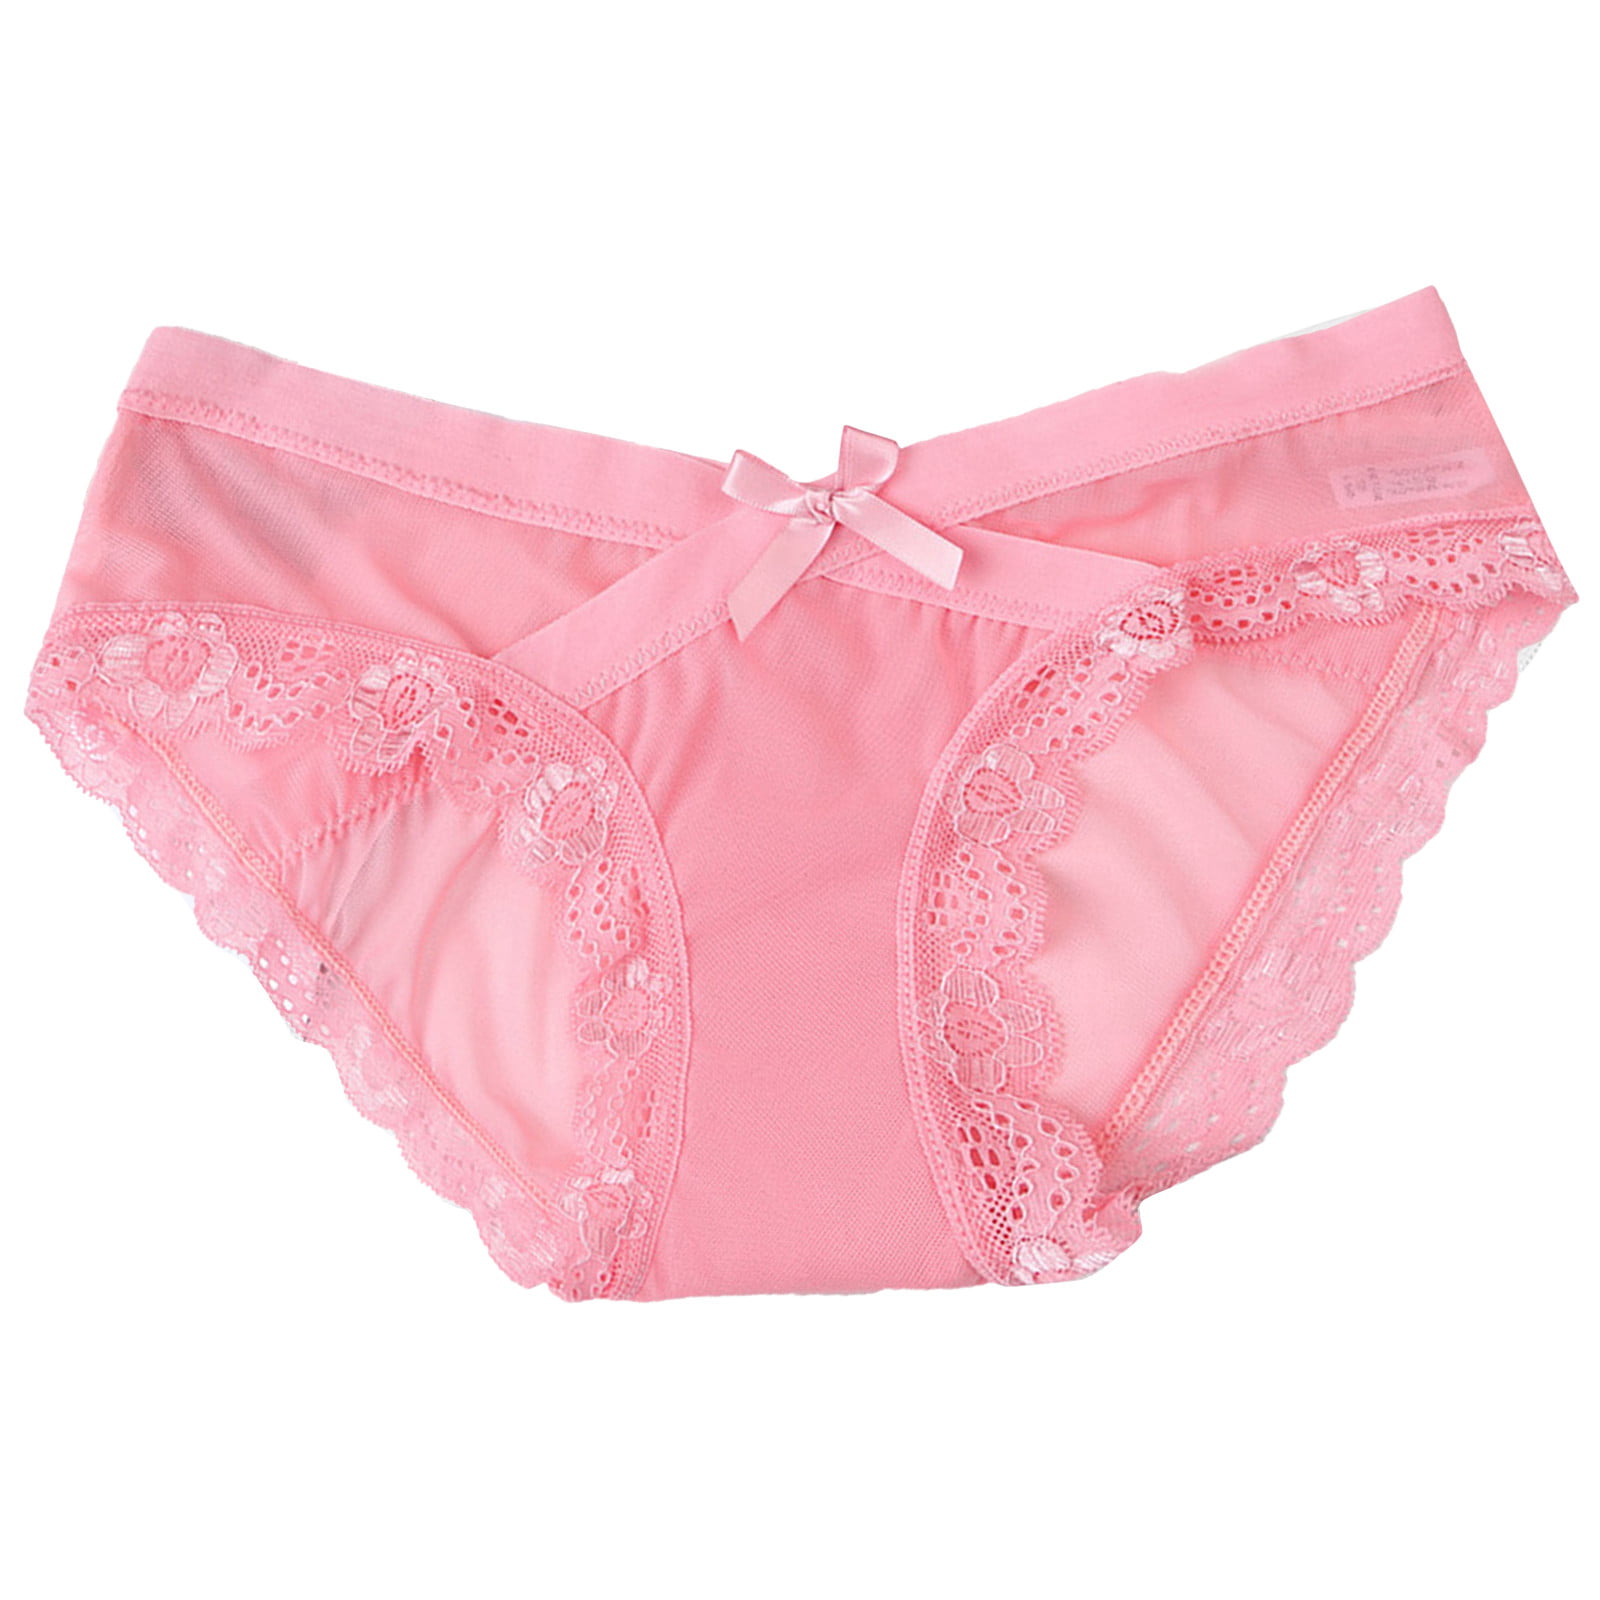 LEEy-world Panties for Women Women Underwear Bow Tie Bikini Panties Lace Low  Waist Rise Hipster Cotton Breathable Panties Pink,S 